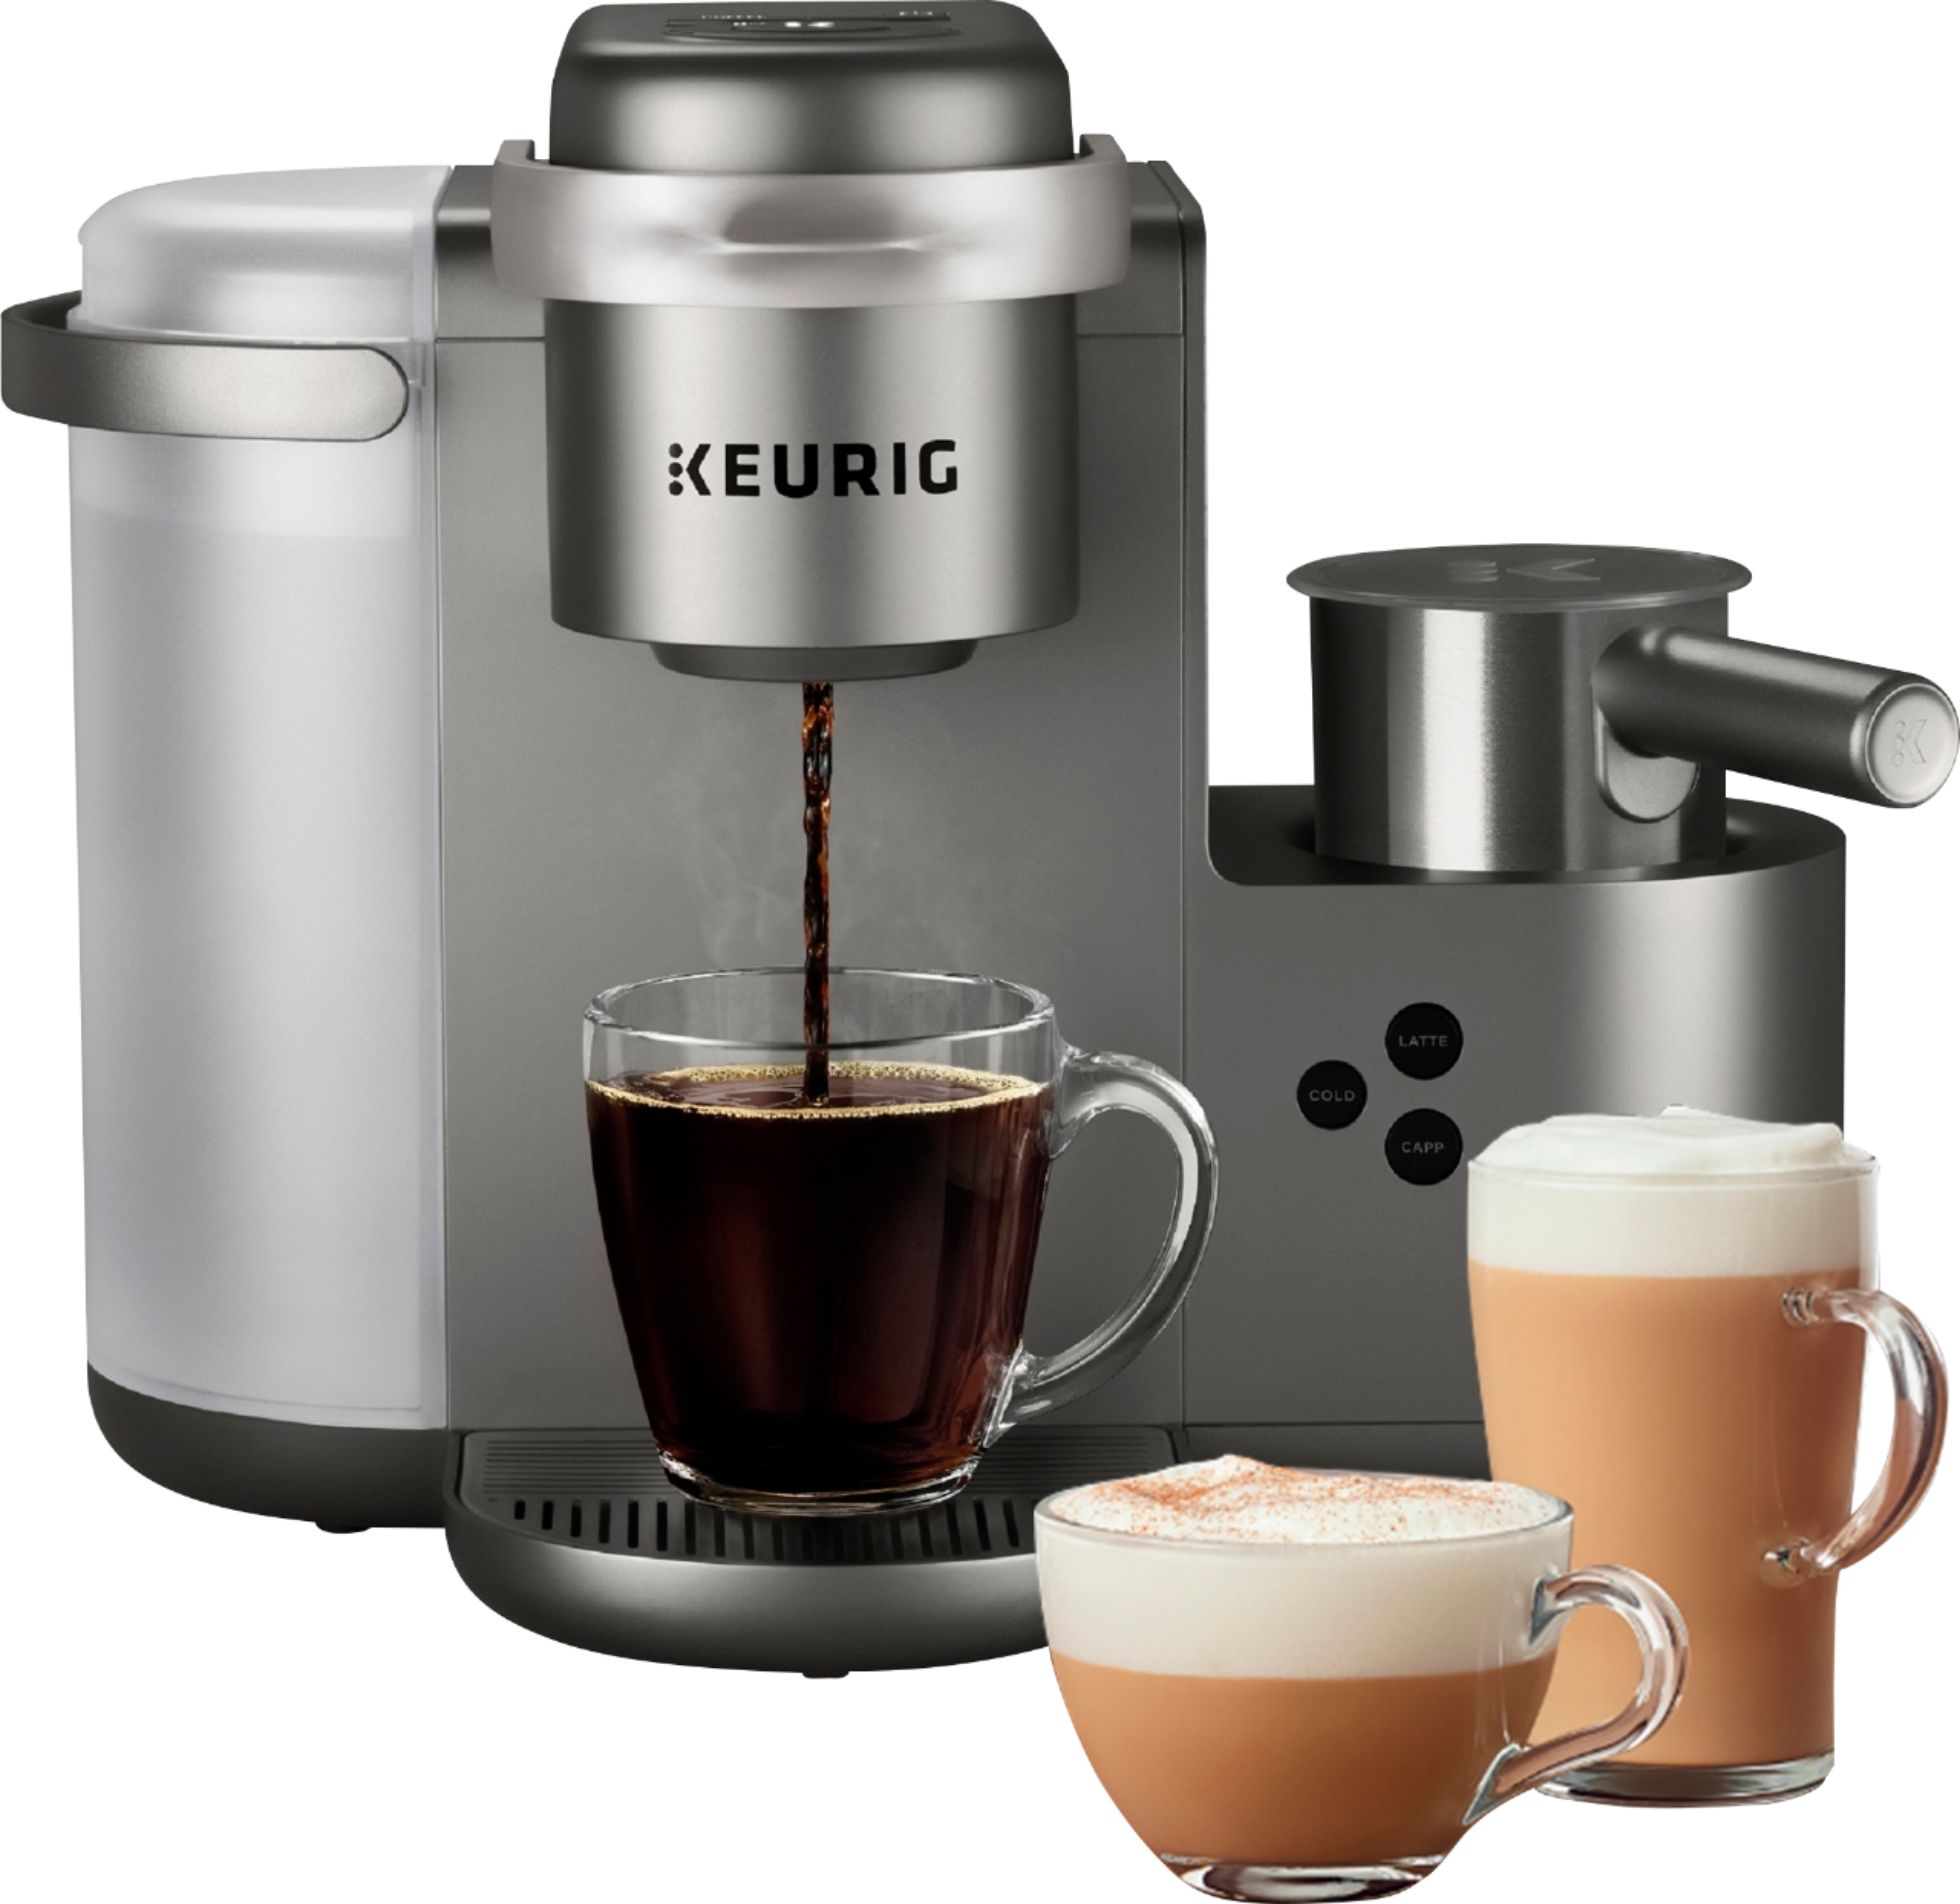 How To Use The Keurig Espresso Machine